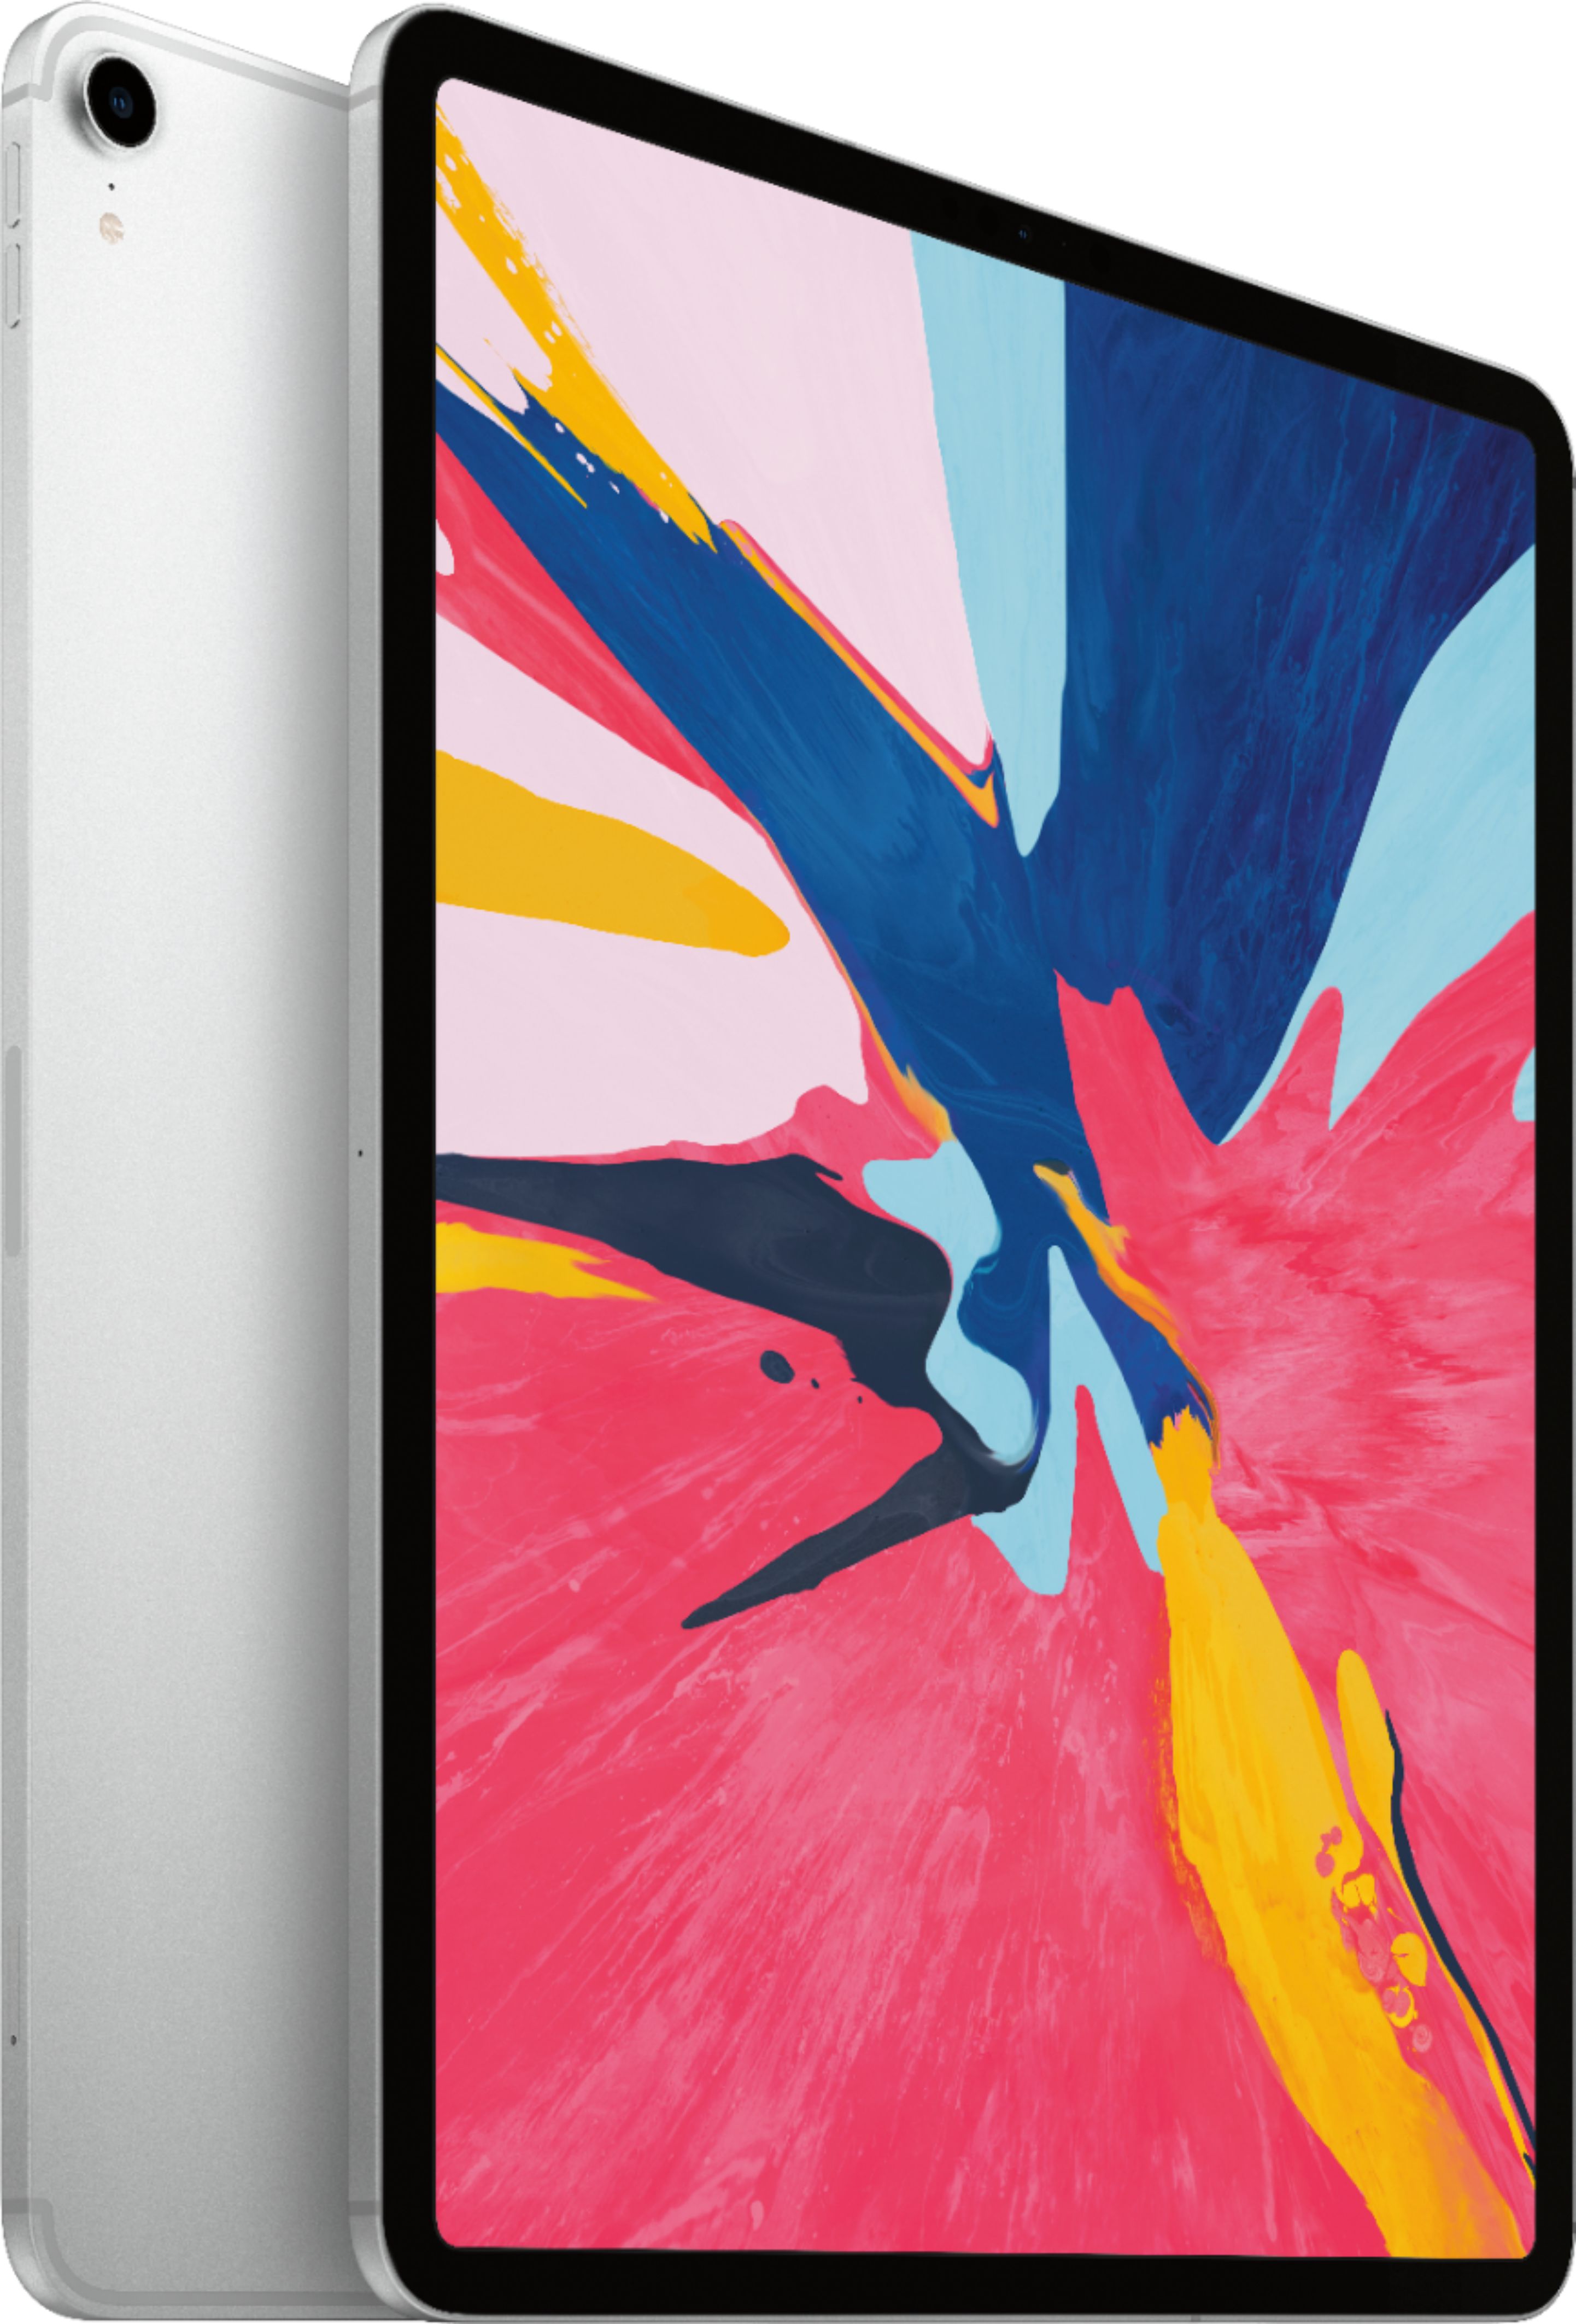 Angle View: Apple - 10.2-Inch iPad with Wi-Fi + Cellular - 64GB - Silver (Verizon)